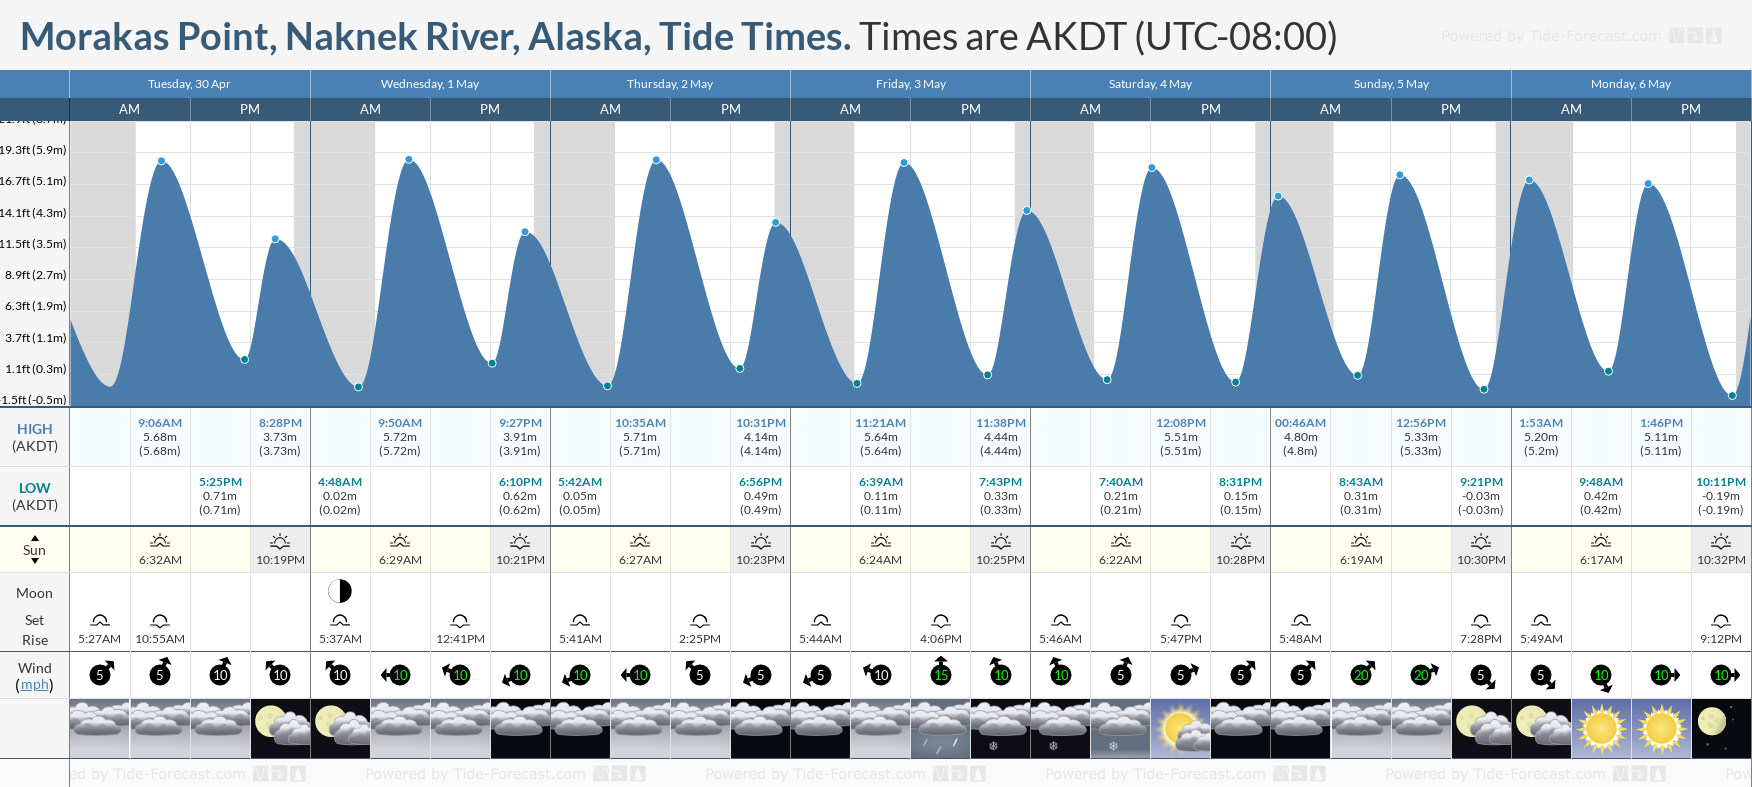 Morakas Point, Naknek River, Alaska Tide Chart including high and low tide tide times for the next 7 days